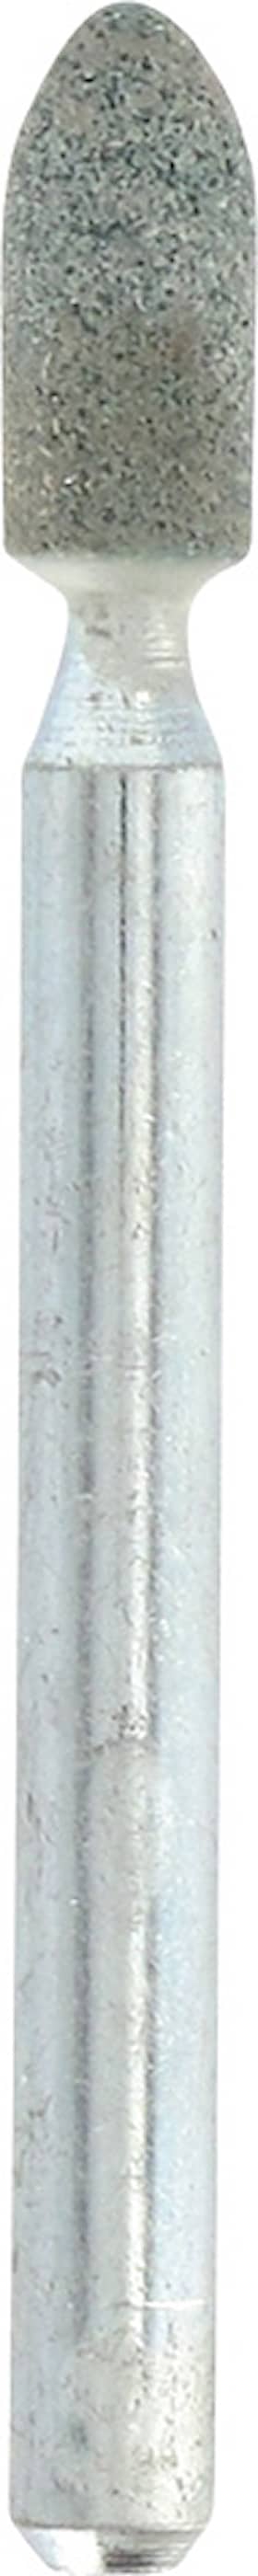 Dremel Piikarbidihiomakivi 3,2 mm (83322)